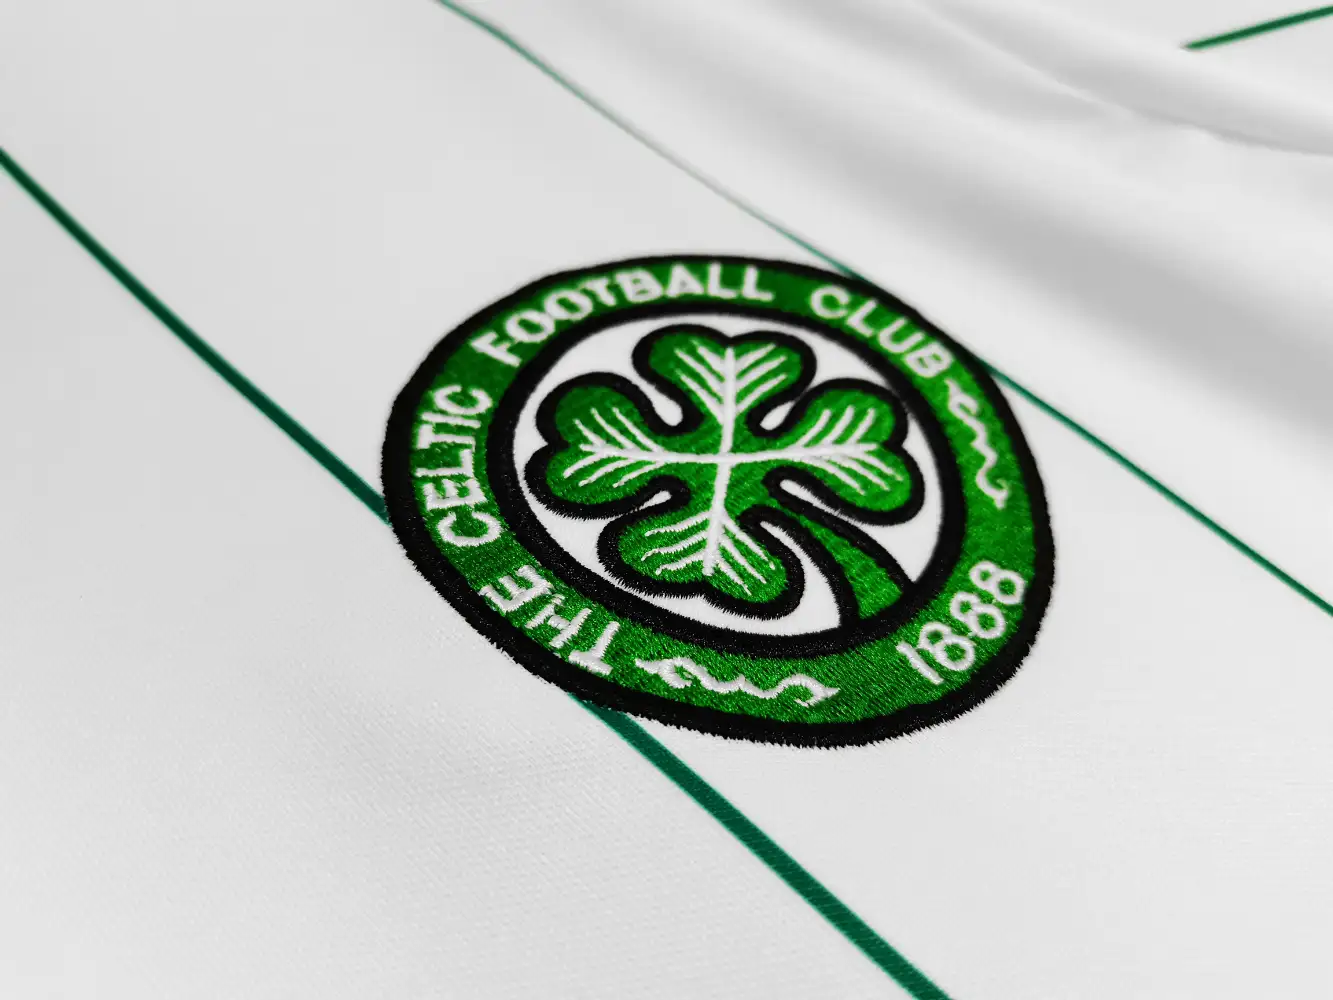 Retro Celtic Away Soccer Jersey 1984/1986 Men Adult CFC S / Blank